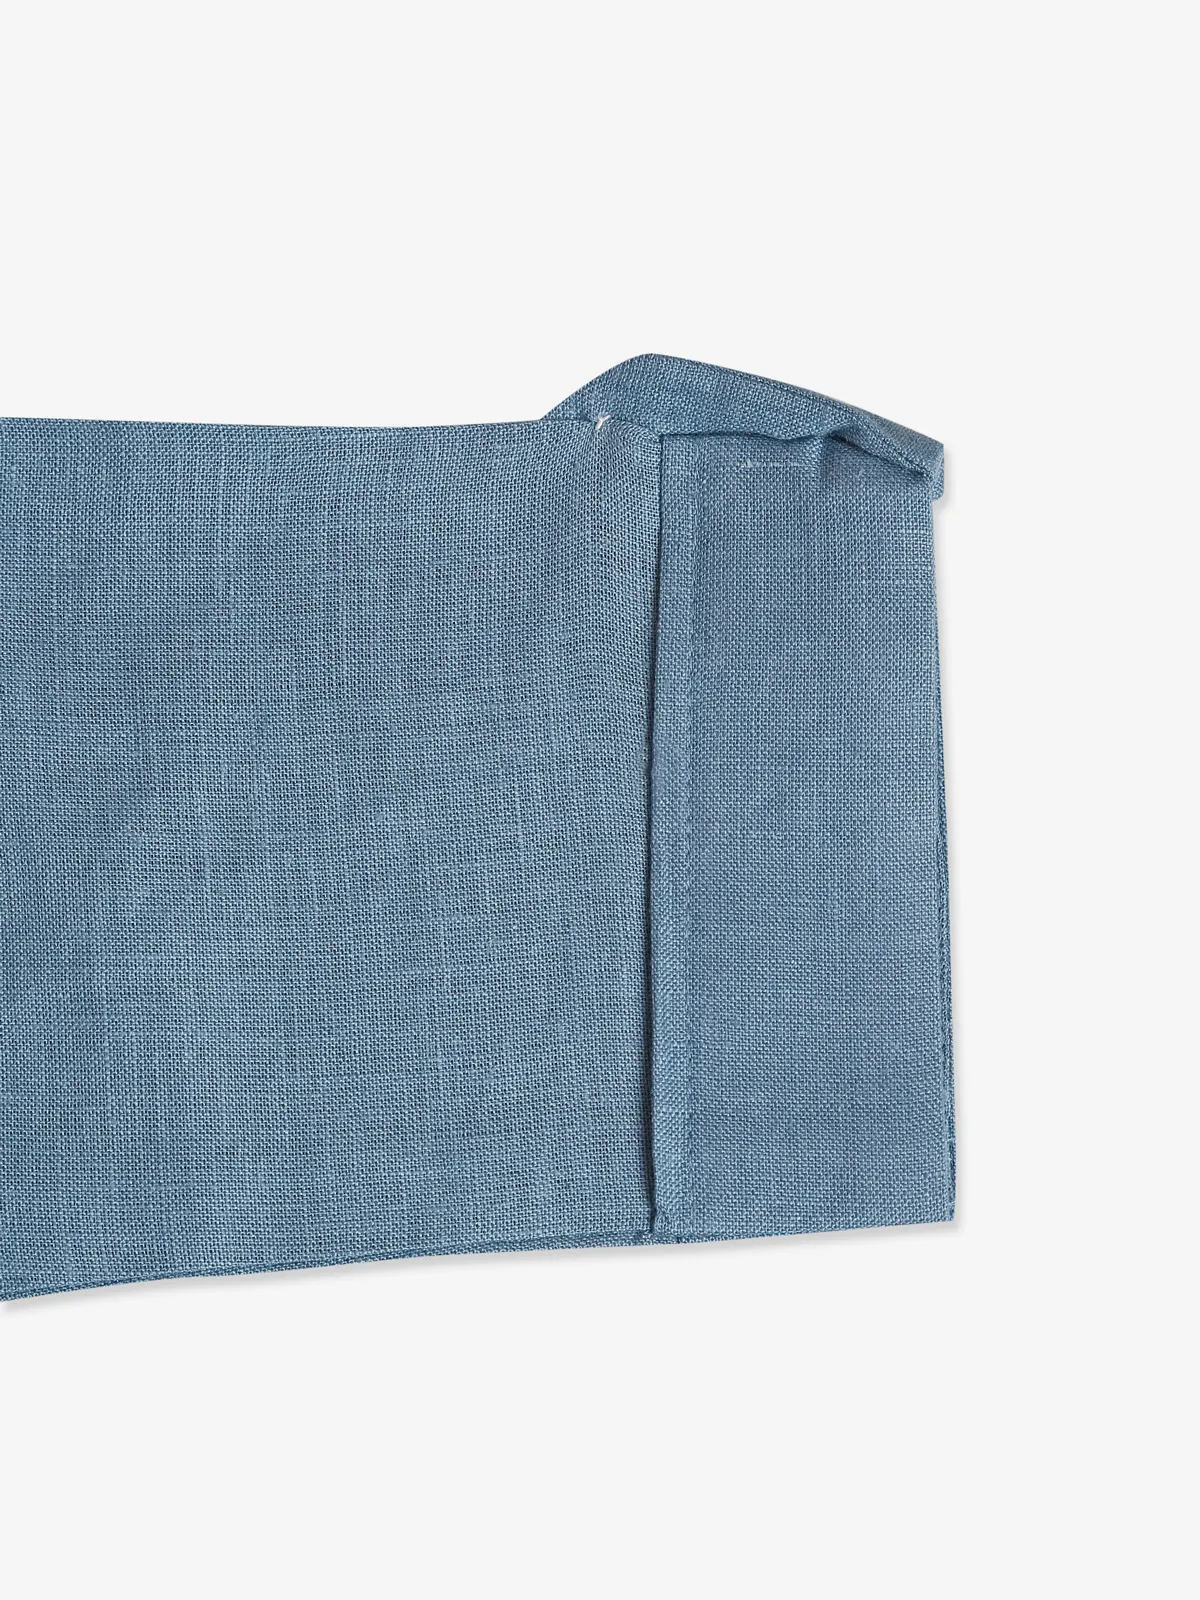 Latest blue cotton tunic top